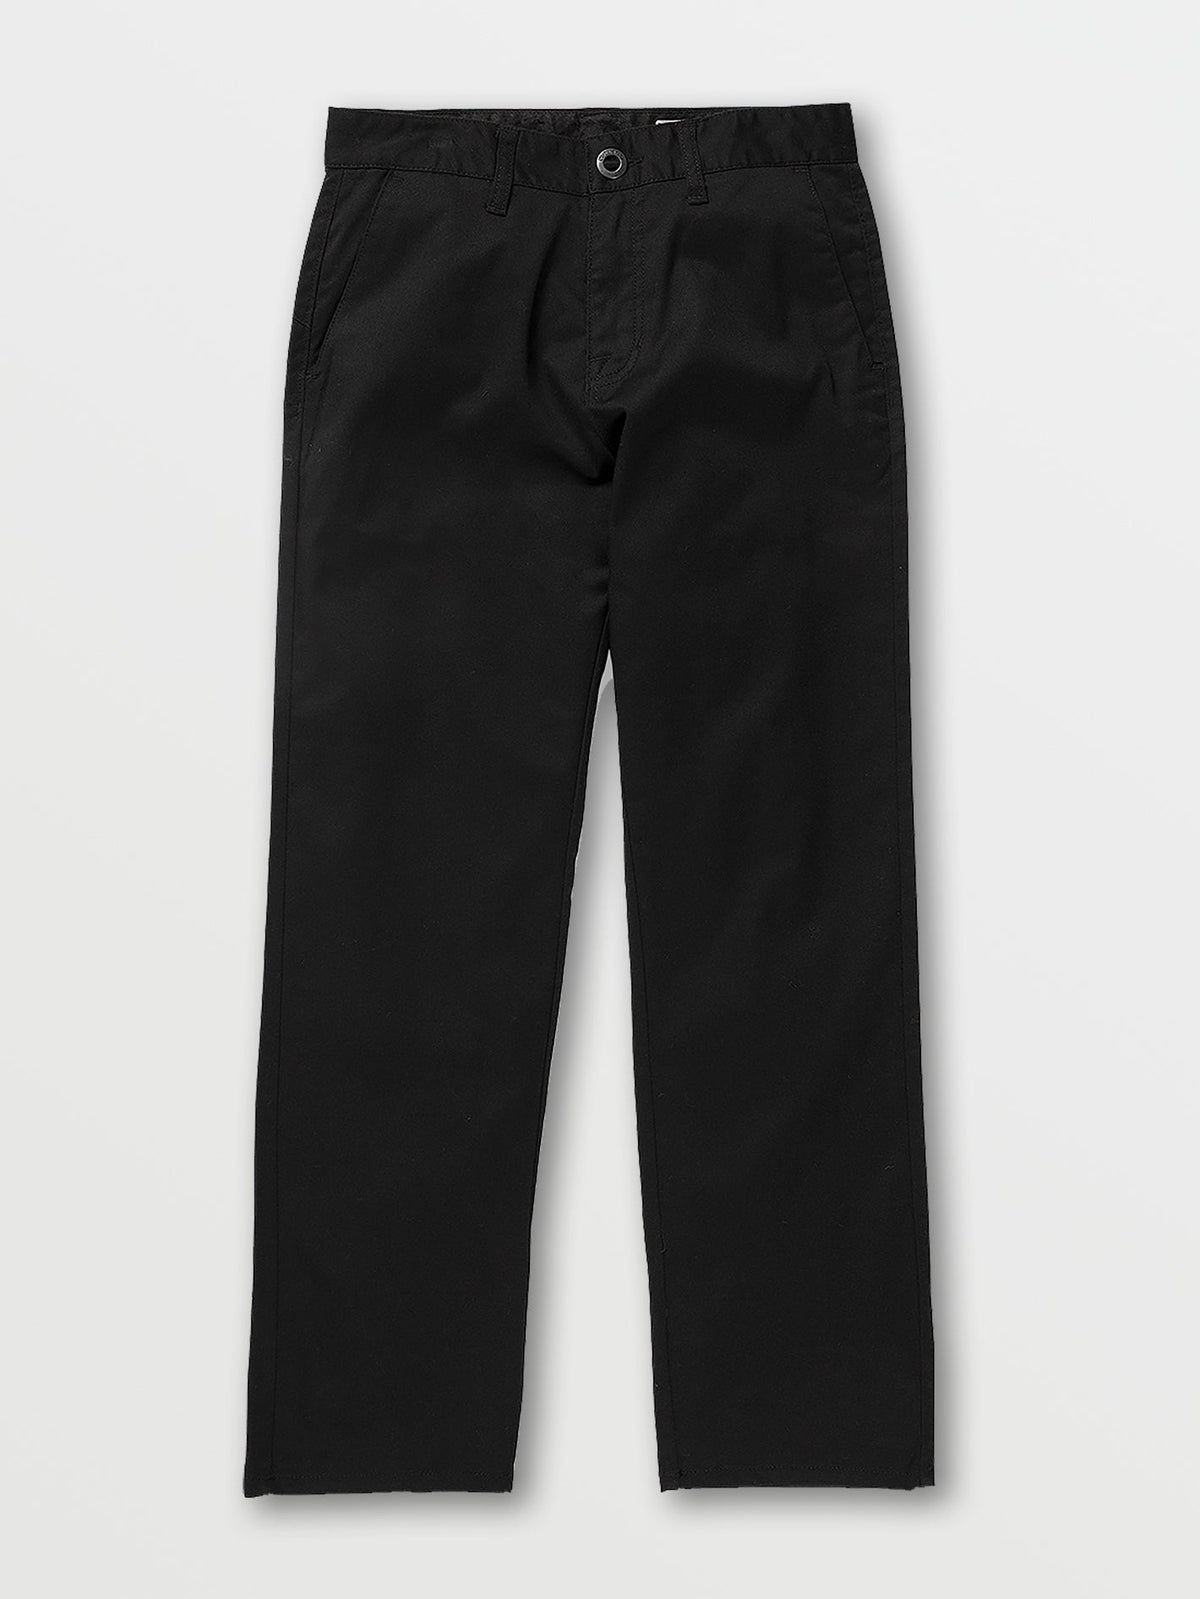 Volcom Frickin Regular Stretch Chino Boys Pants (Age 8-14) Black